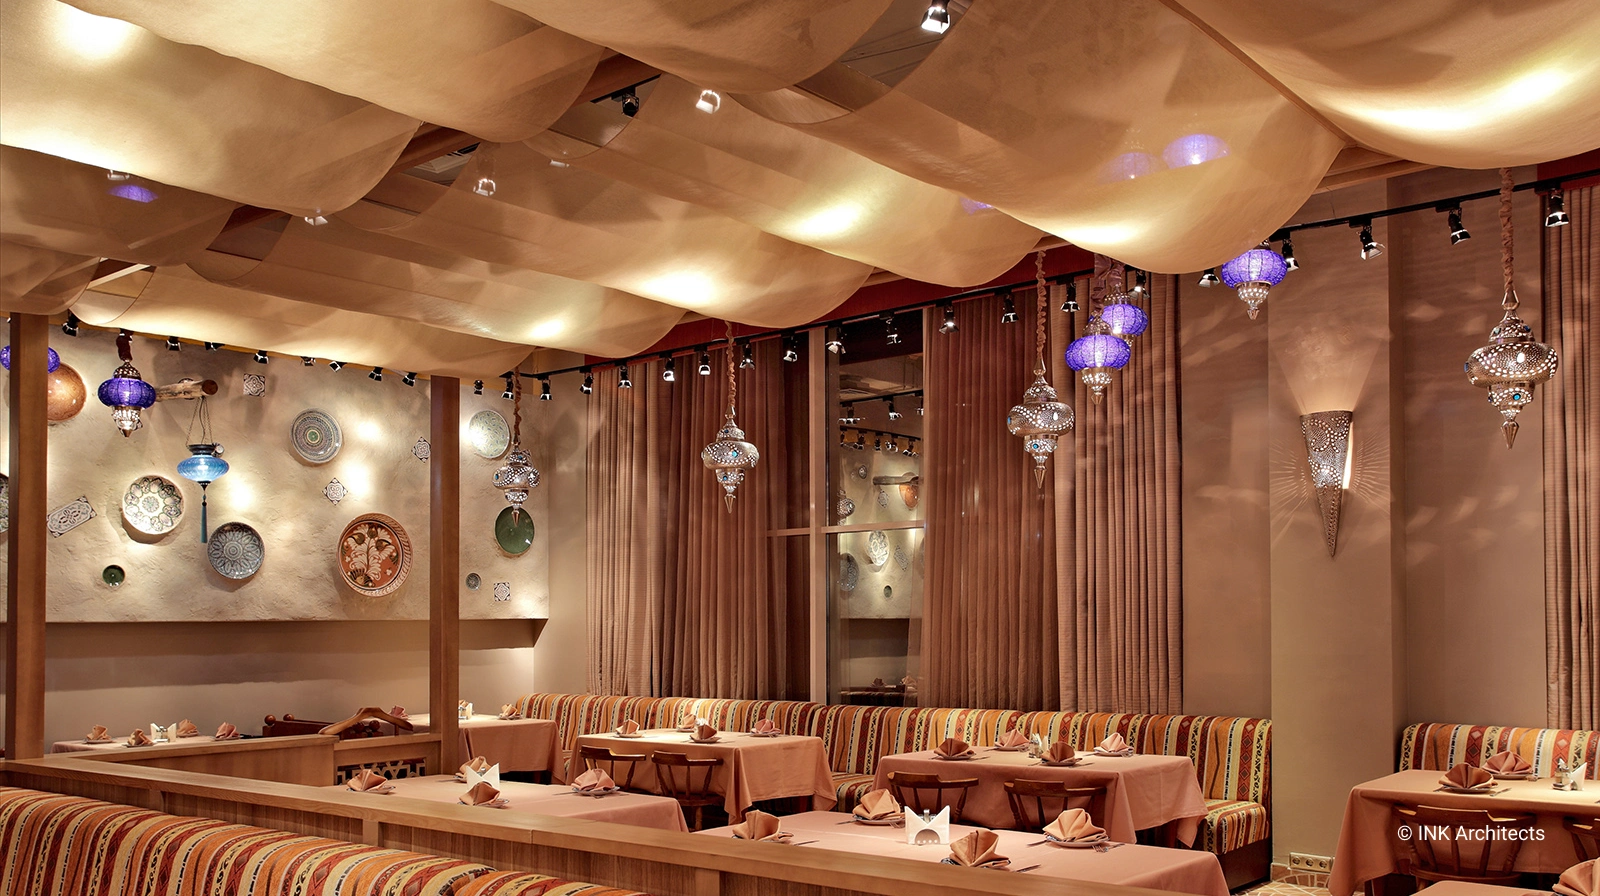 Image: Interior Design Restaurant Tubeteyka